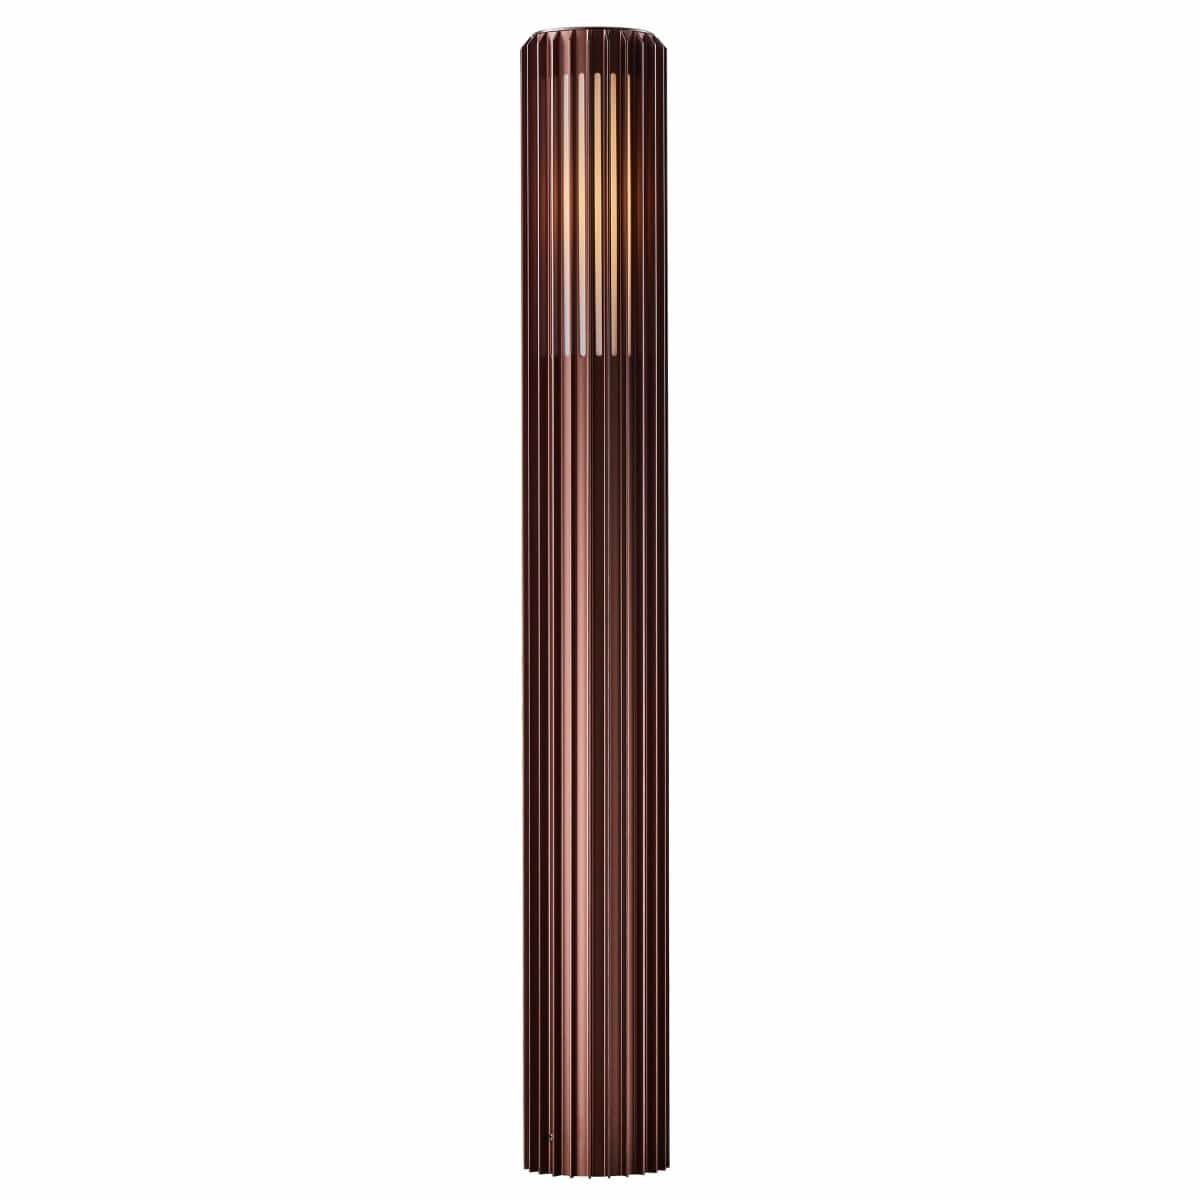 Nordlux Outdoor Lights Brown metalic Aludra 95 Tall Outdoor Garden Light, aluminium, black, or brown